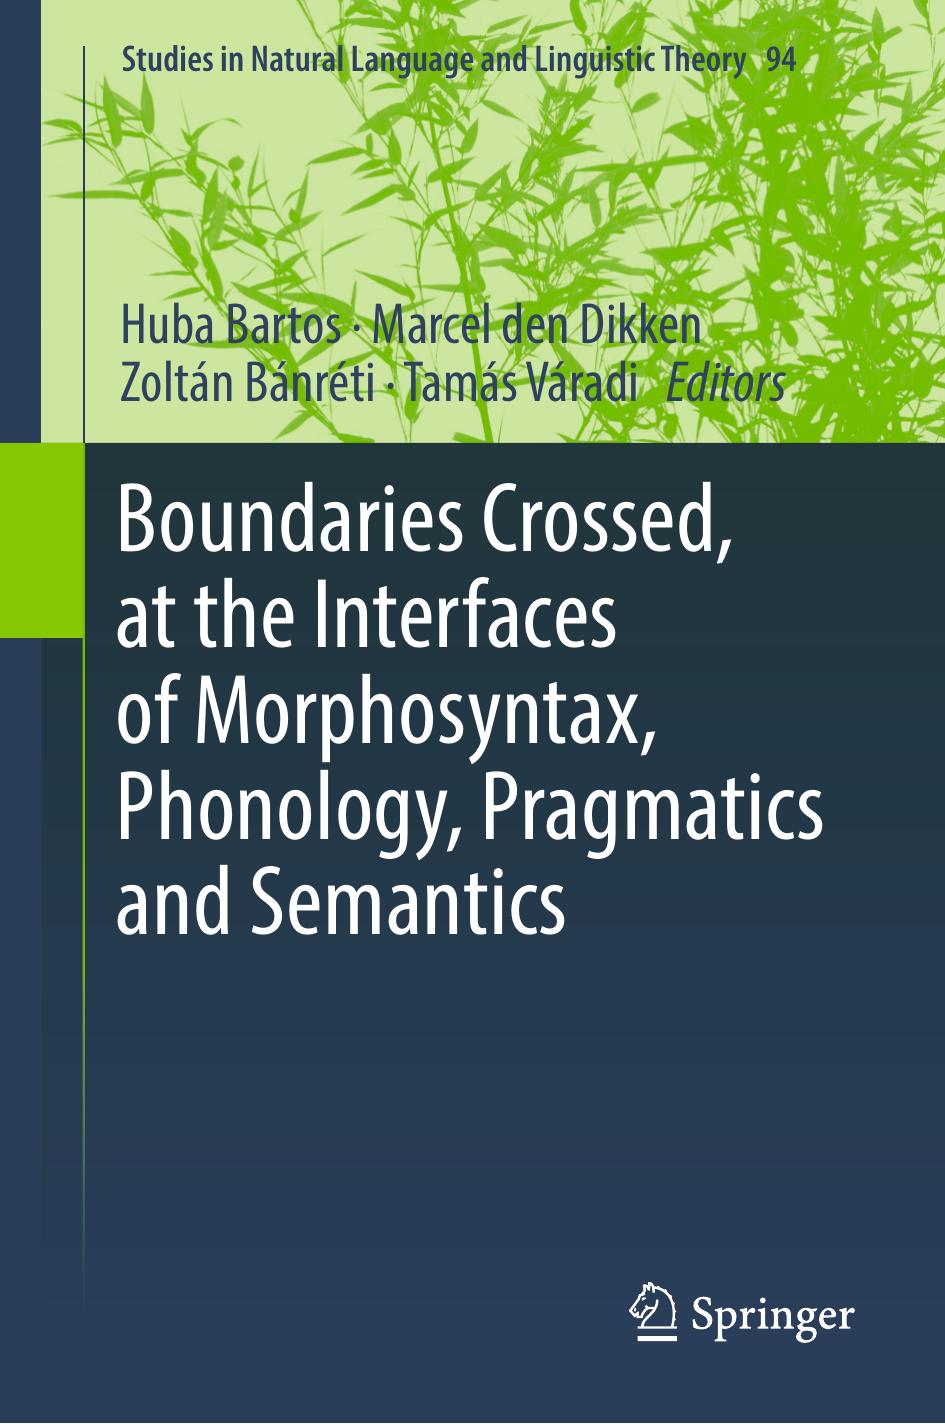 Boundaries Crossed, at the Interfaces of Morphosyntax, Phonology, Pragmatics and Semantics